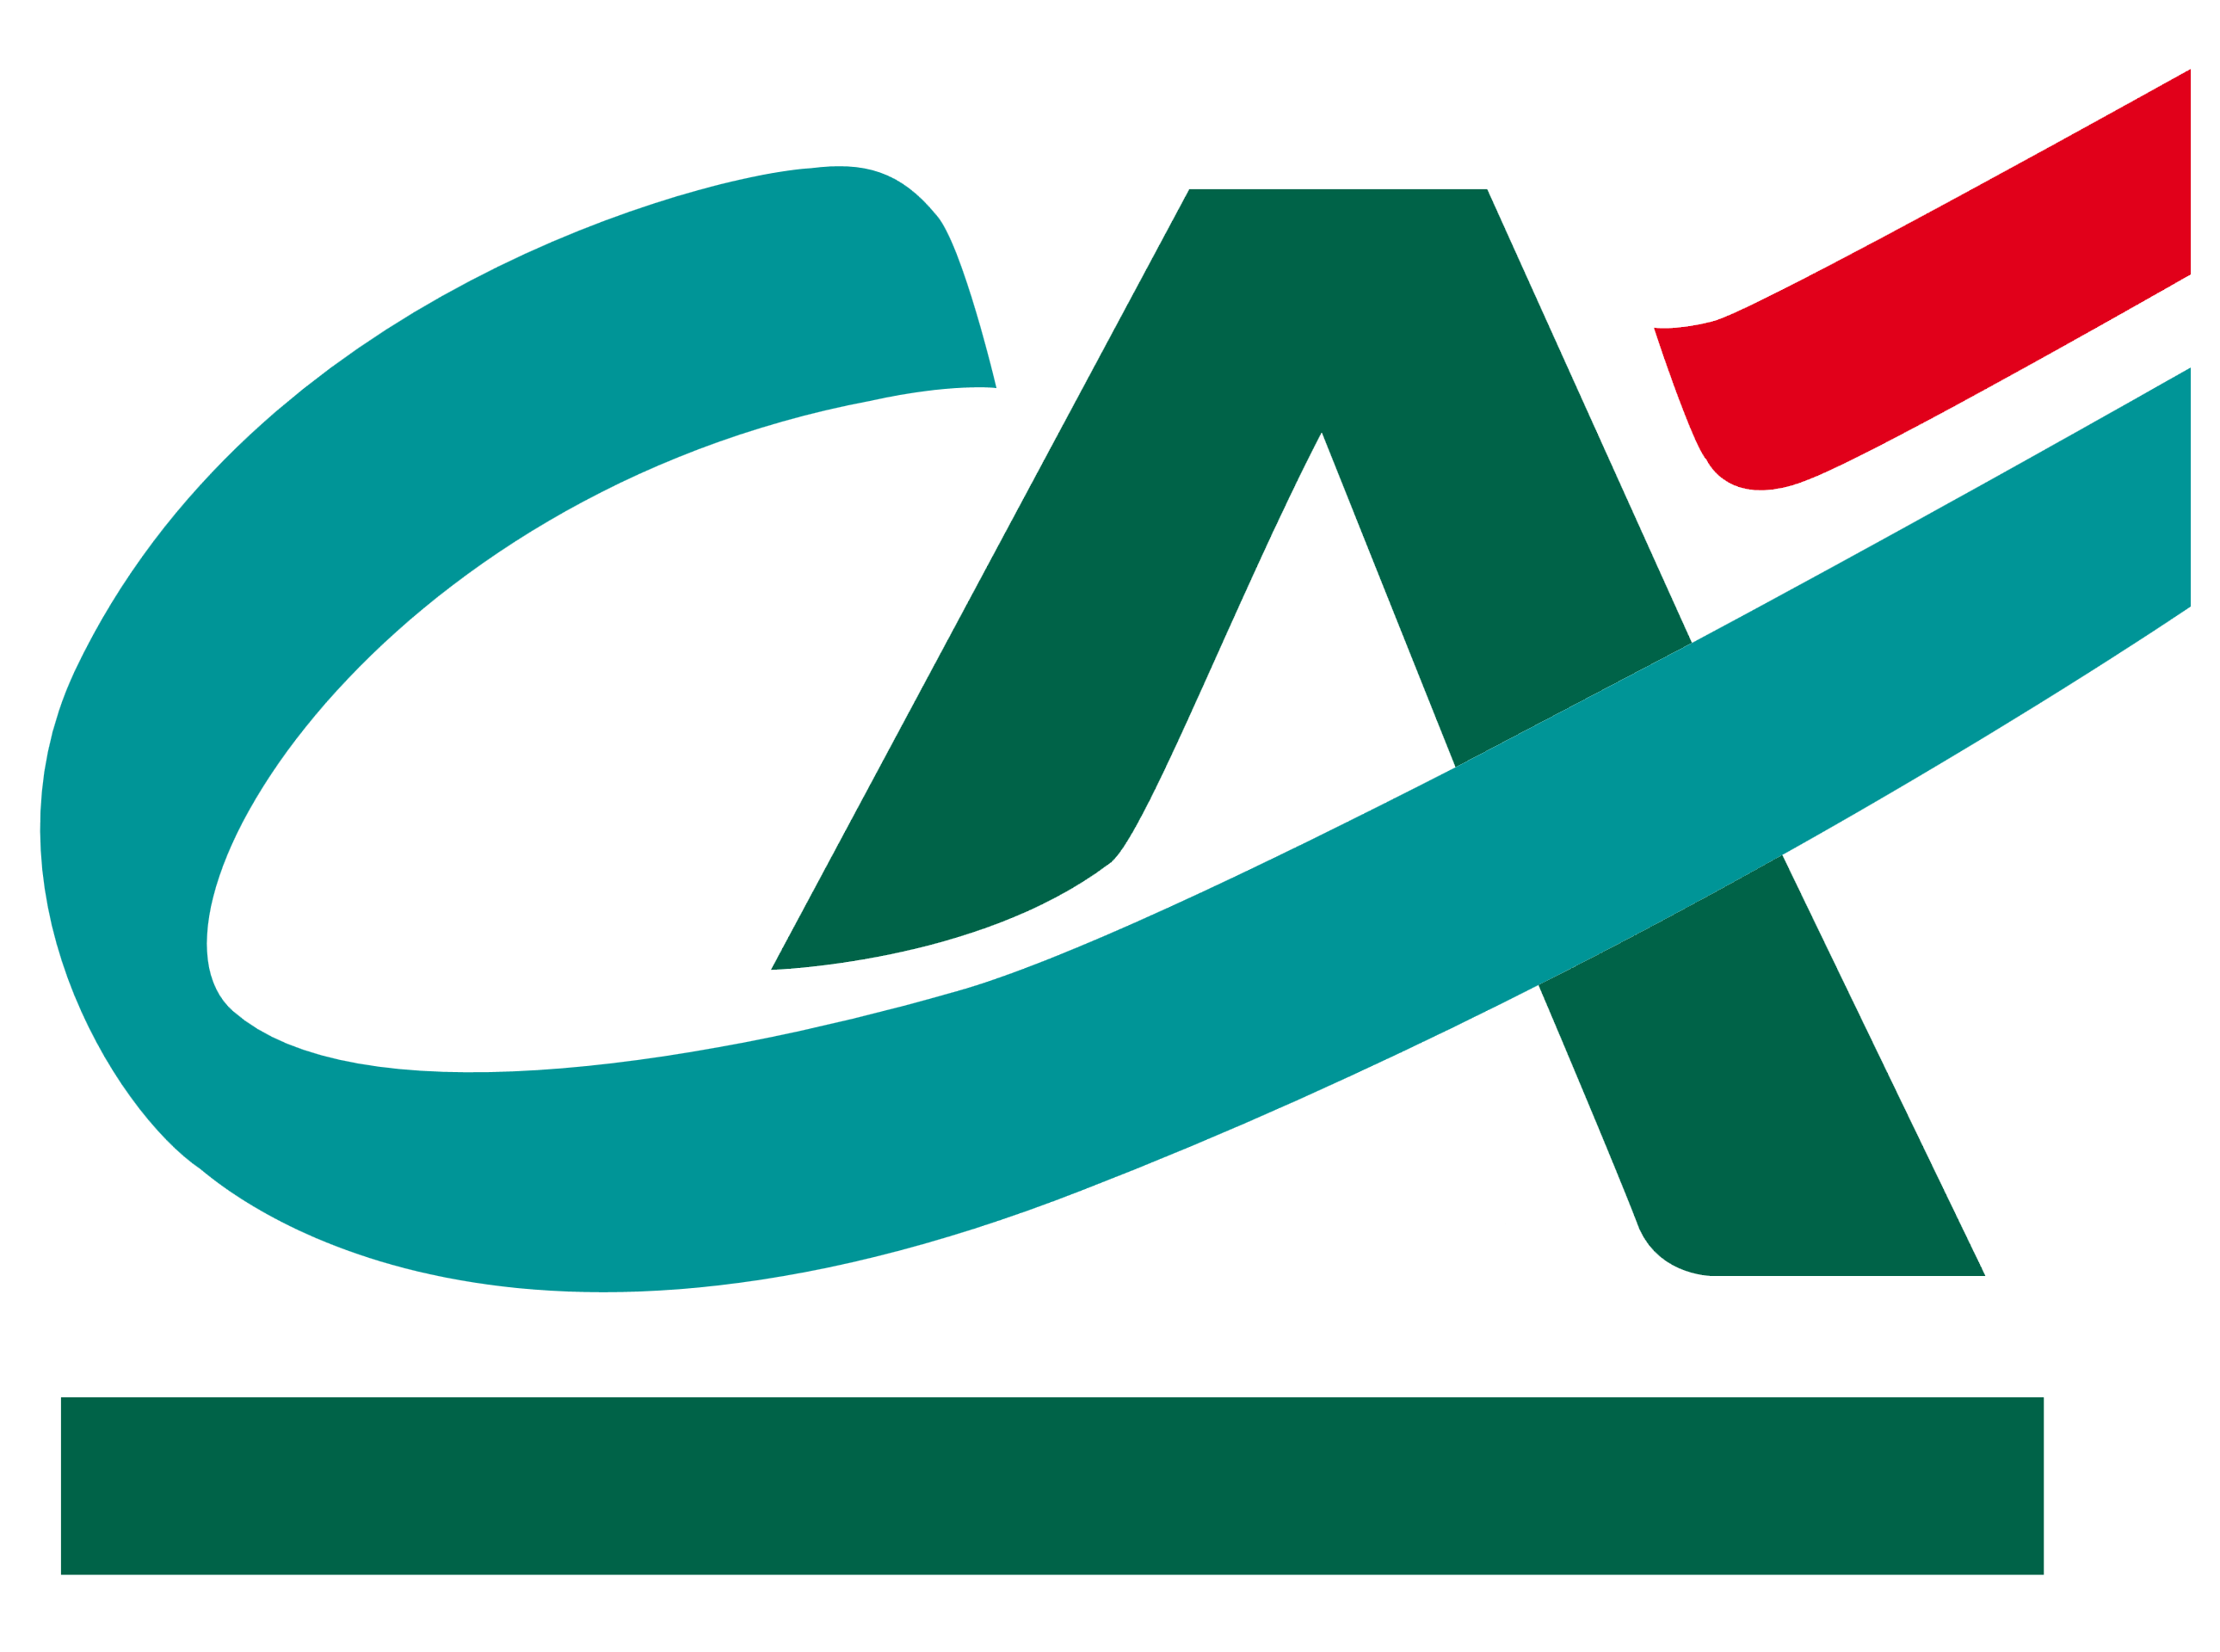 CA, Crédit Agricole Bank logo, logotype